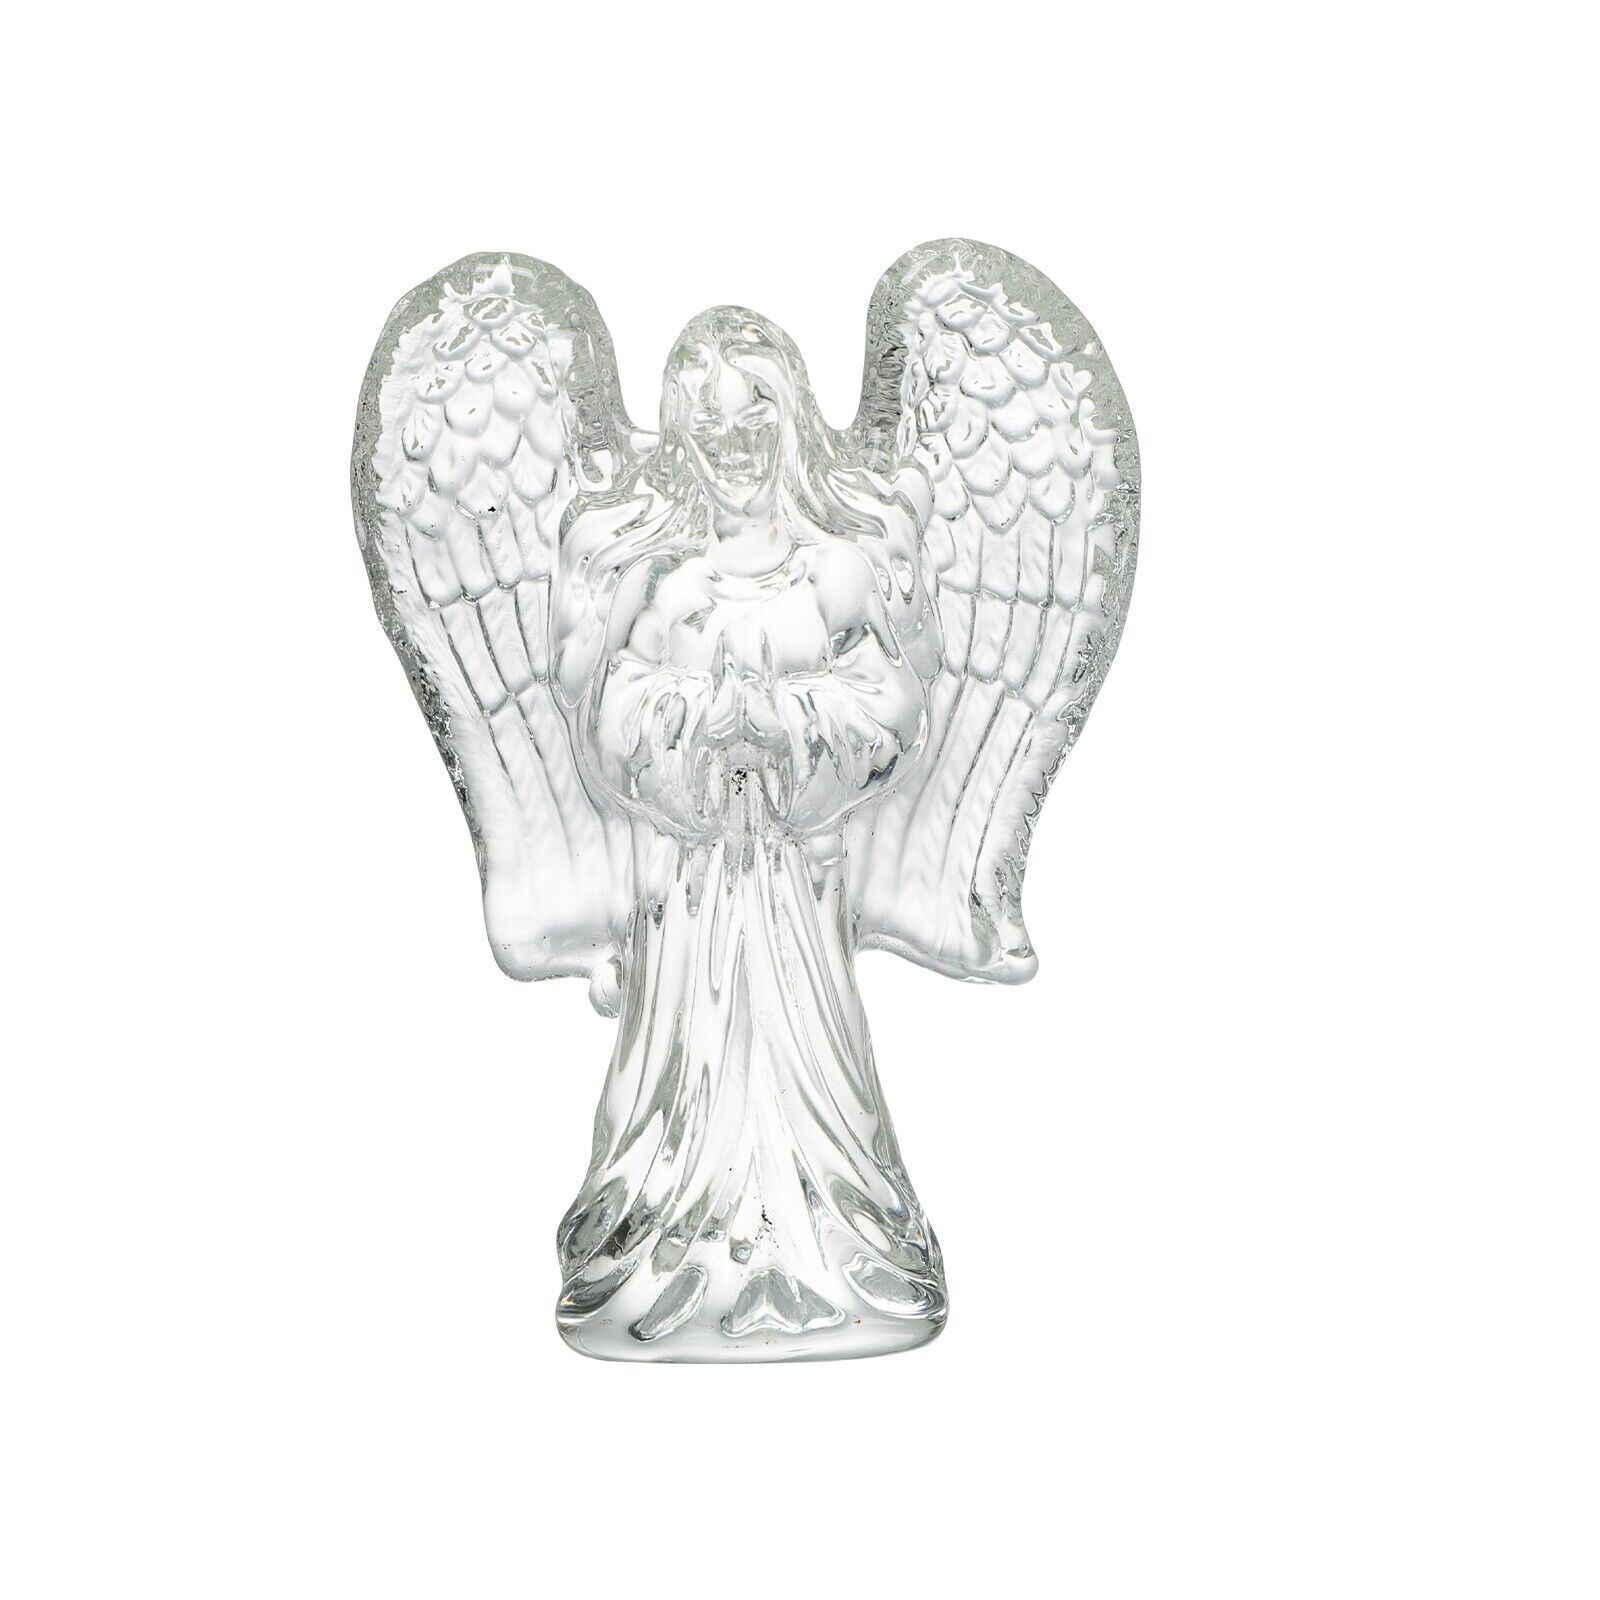 Glass Angel Figurine Transparent Wing Angel Paperweight Desktop Crystal Ornament